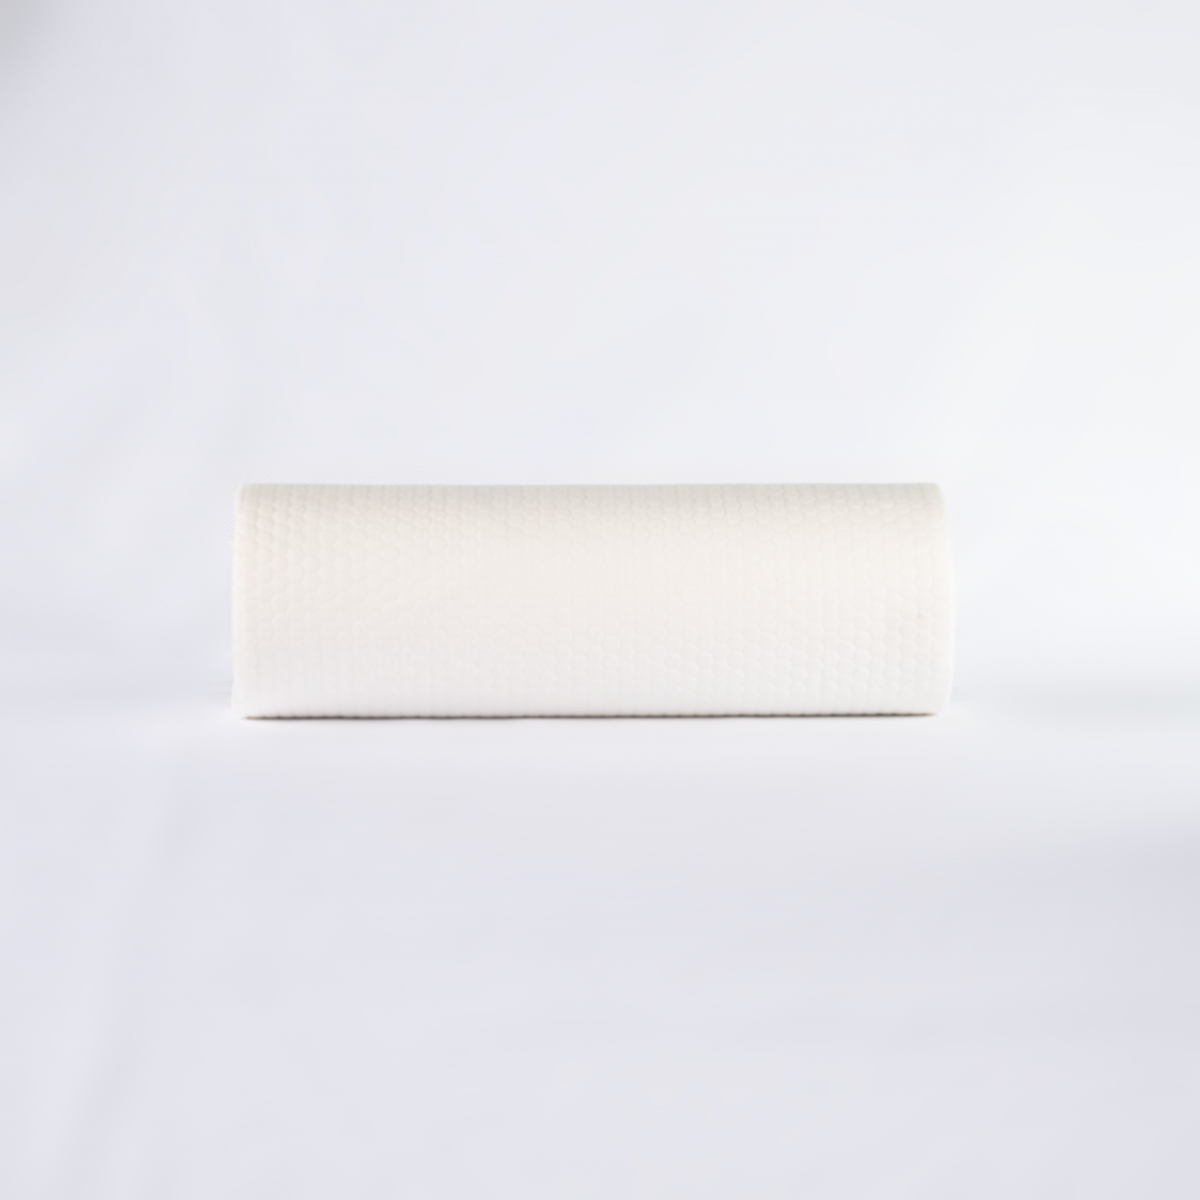 Disposable non woven paper towel WF-0007-EAPRON- Apron, Oven mitt, Pot holder, Tea towel, Table cloth